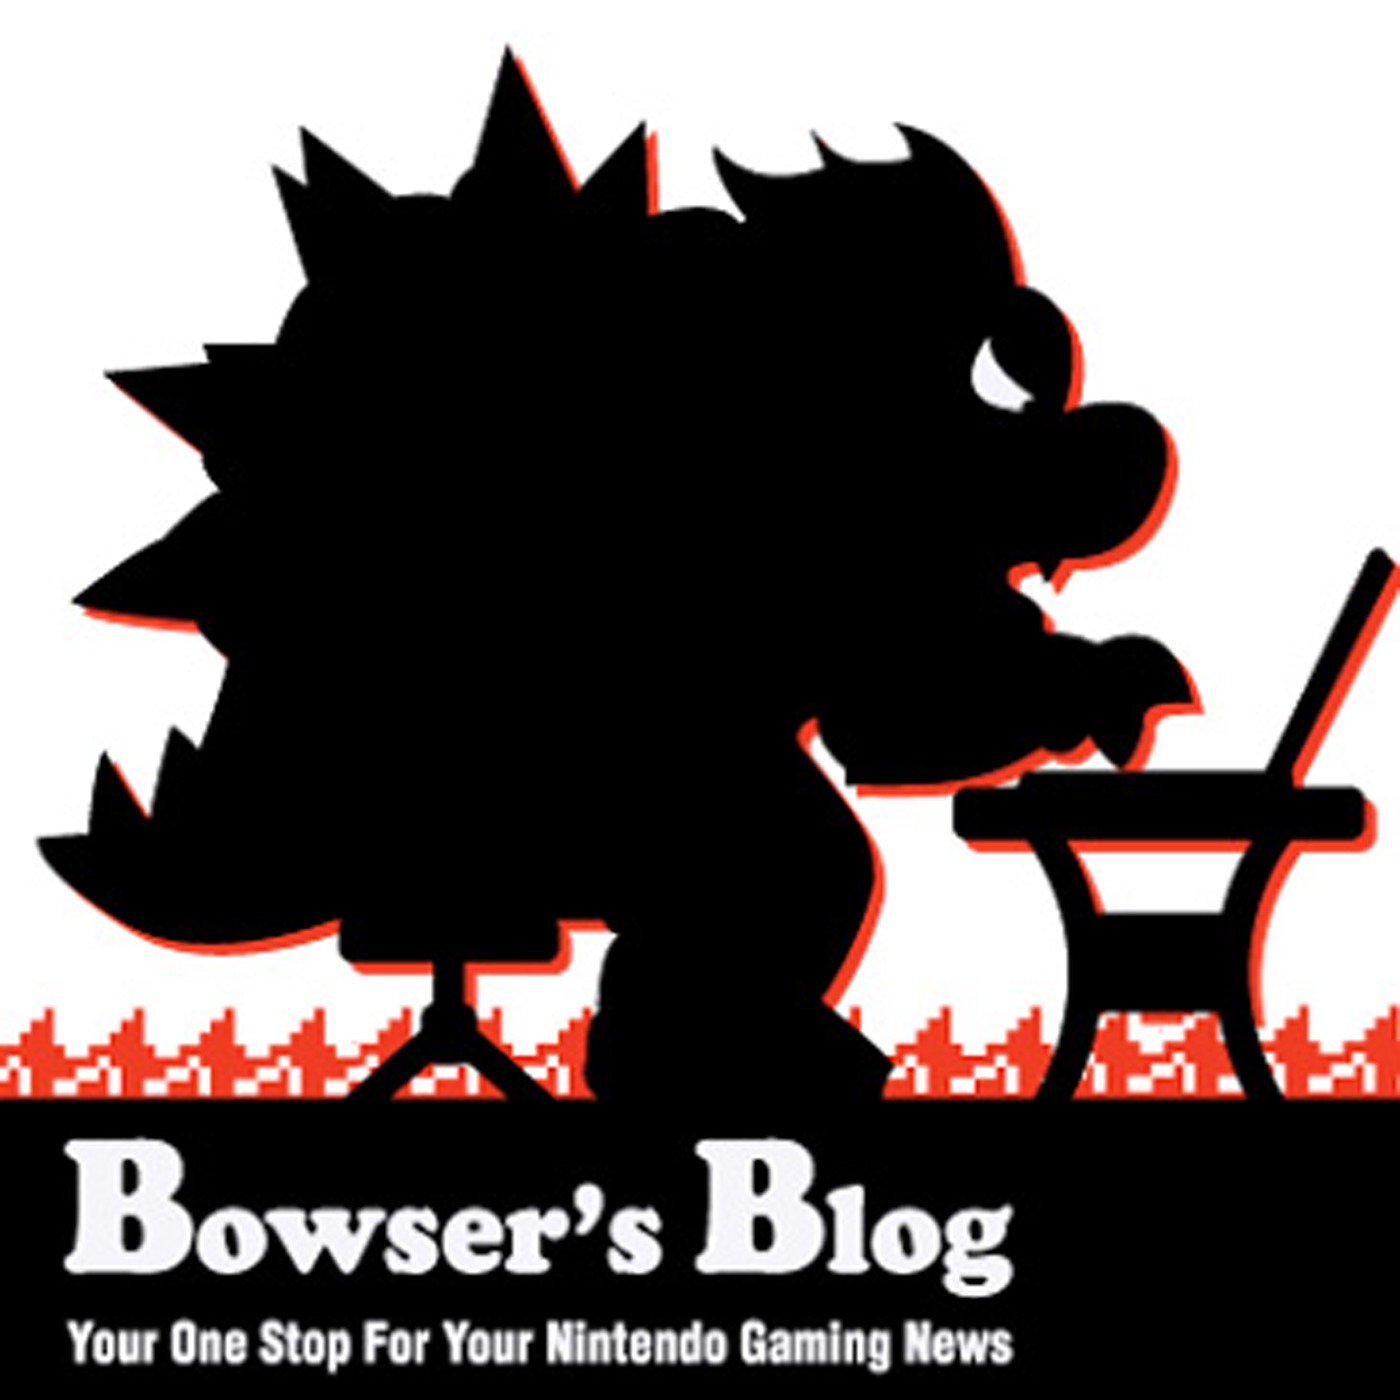 Bowsersblog's Podcast